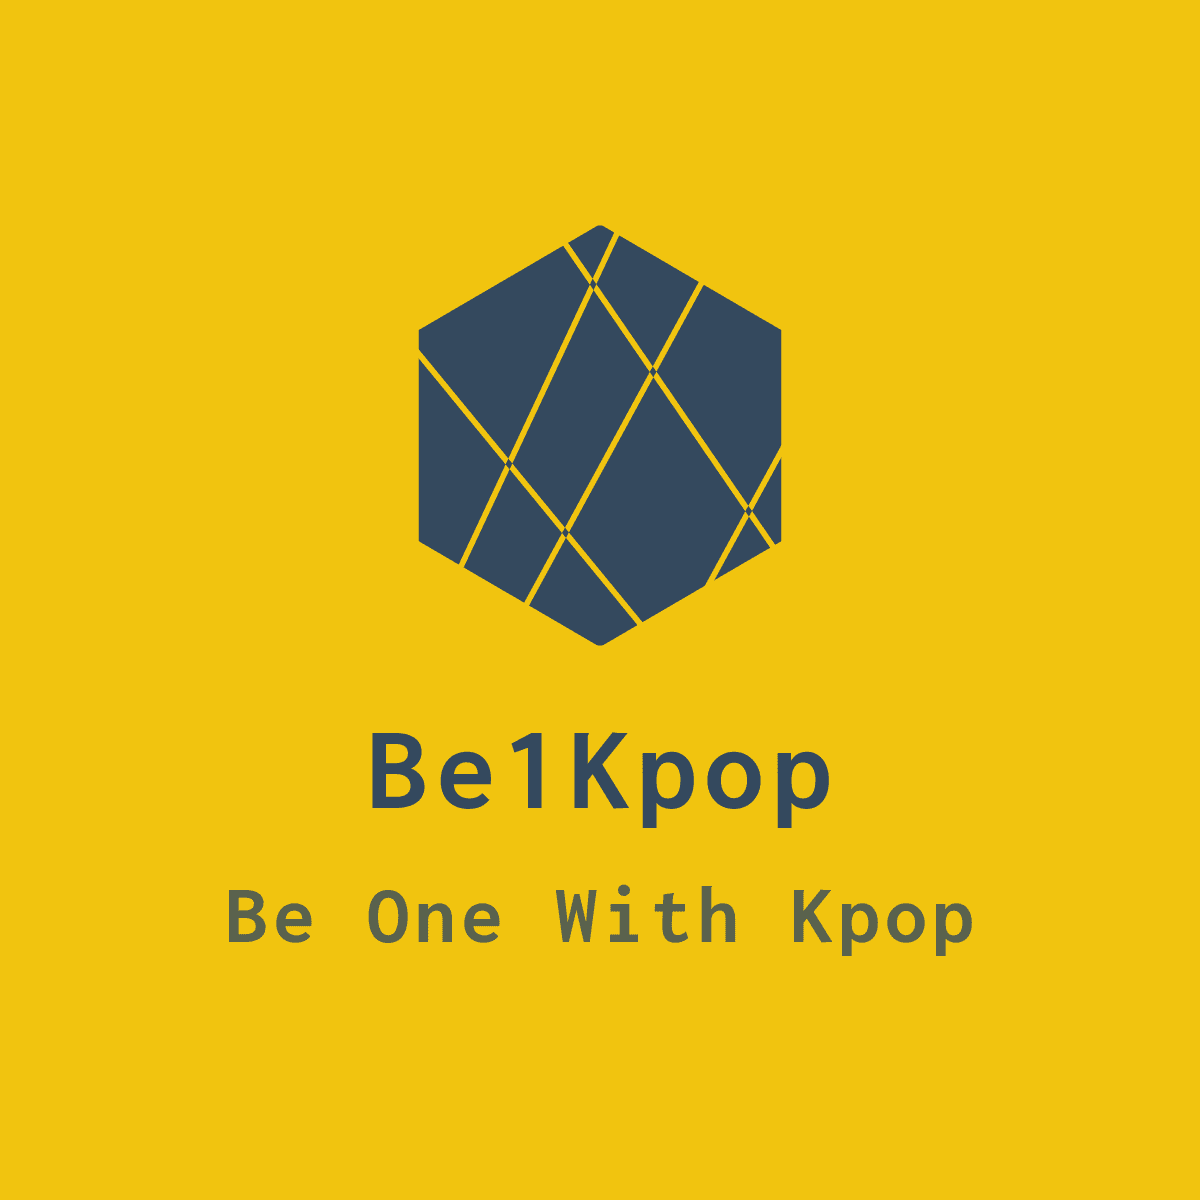 Be1Kpop